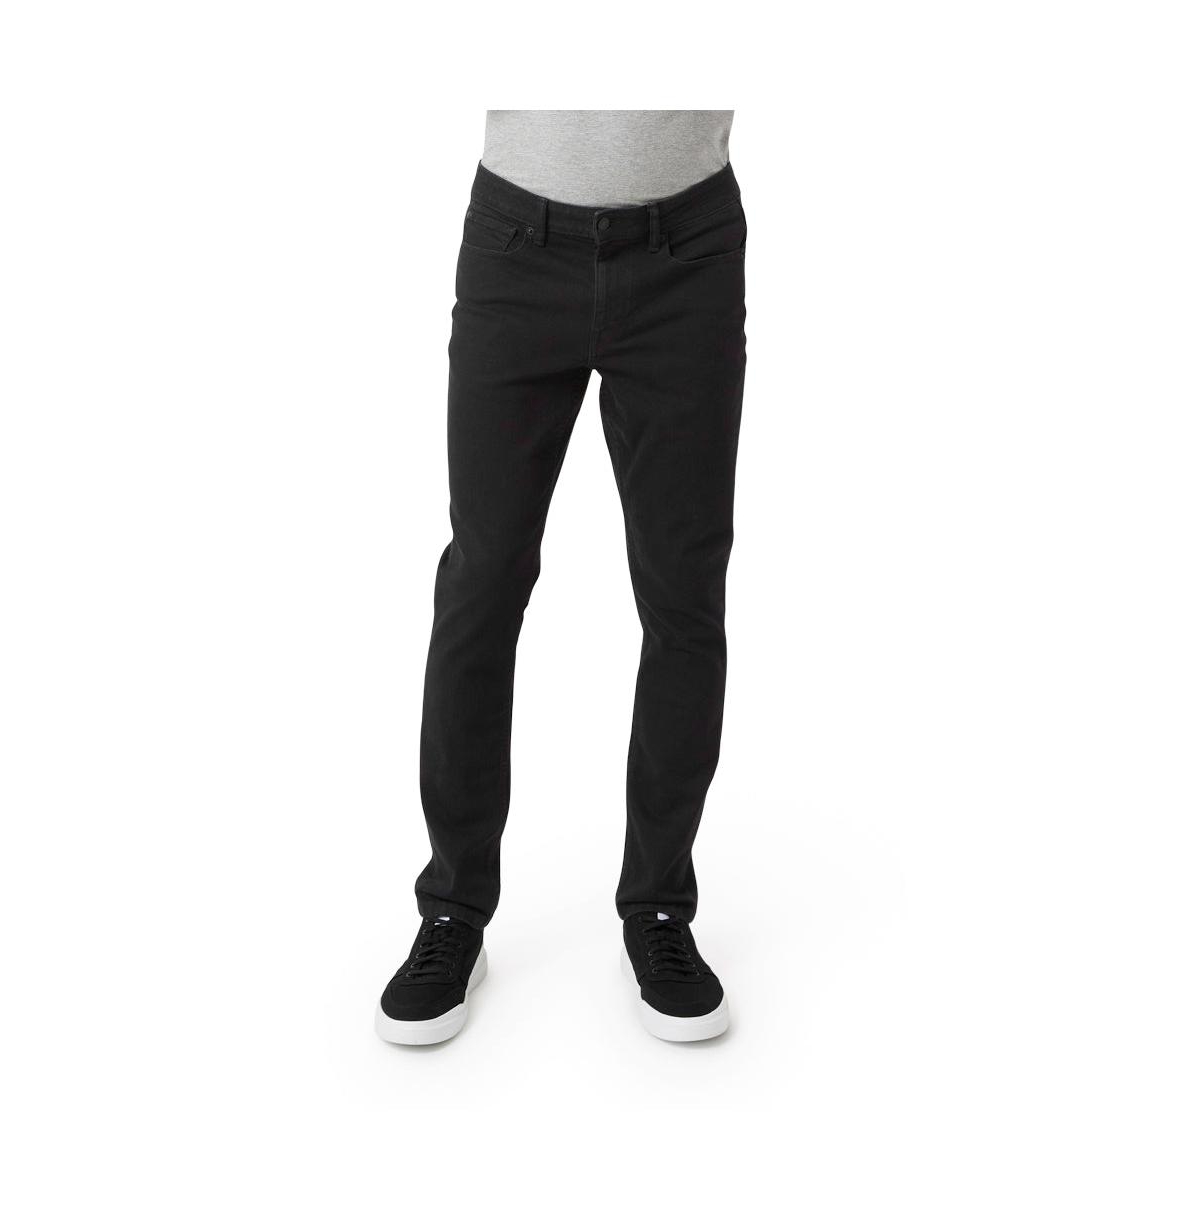 Men's Slim Fit Bedford Denim Jeans - Black rinse